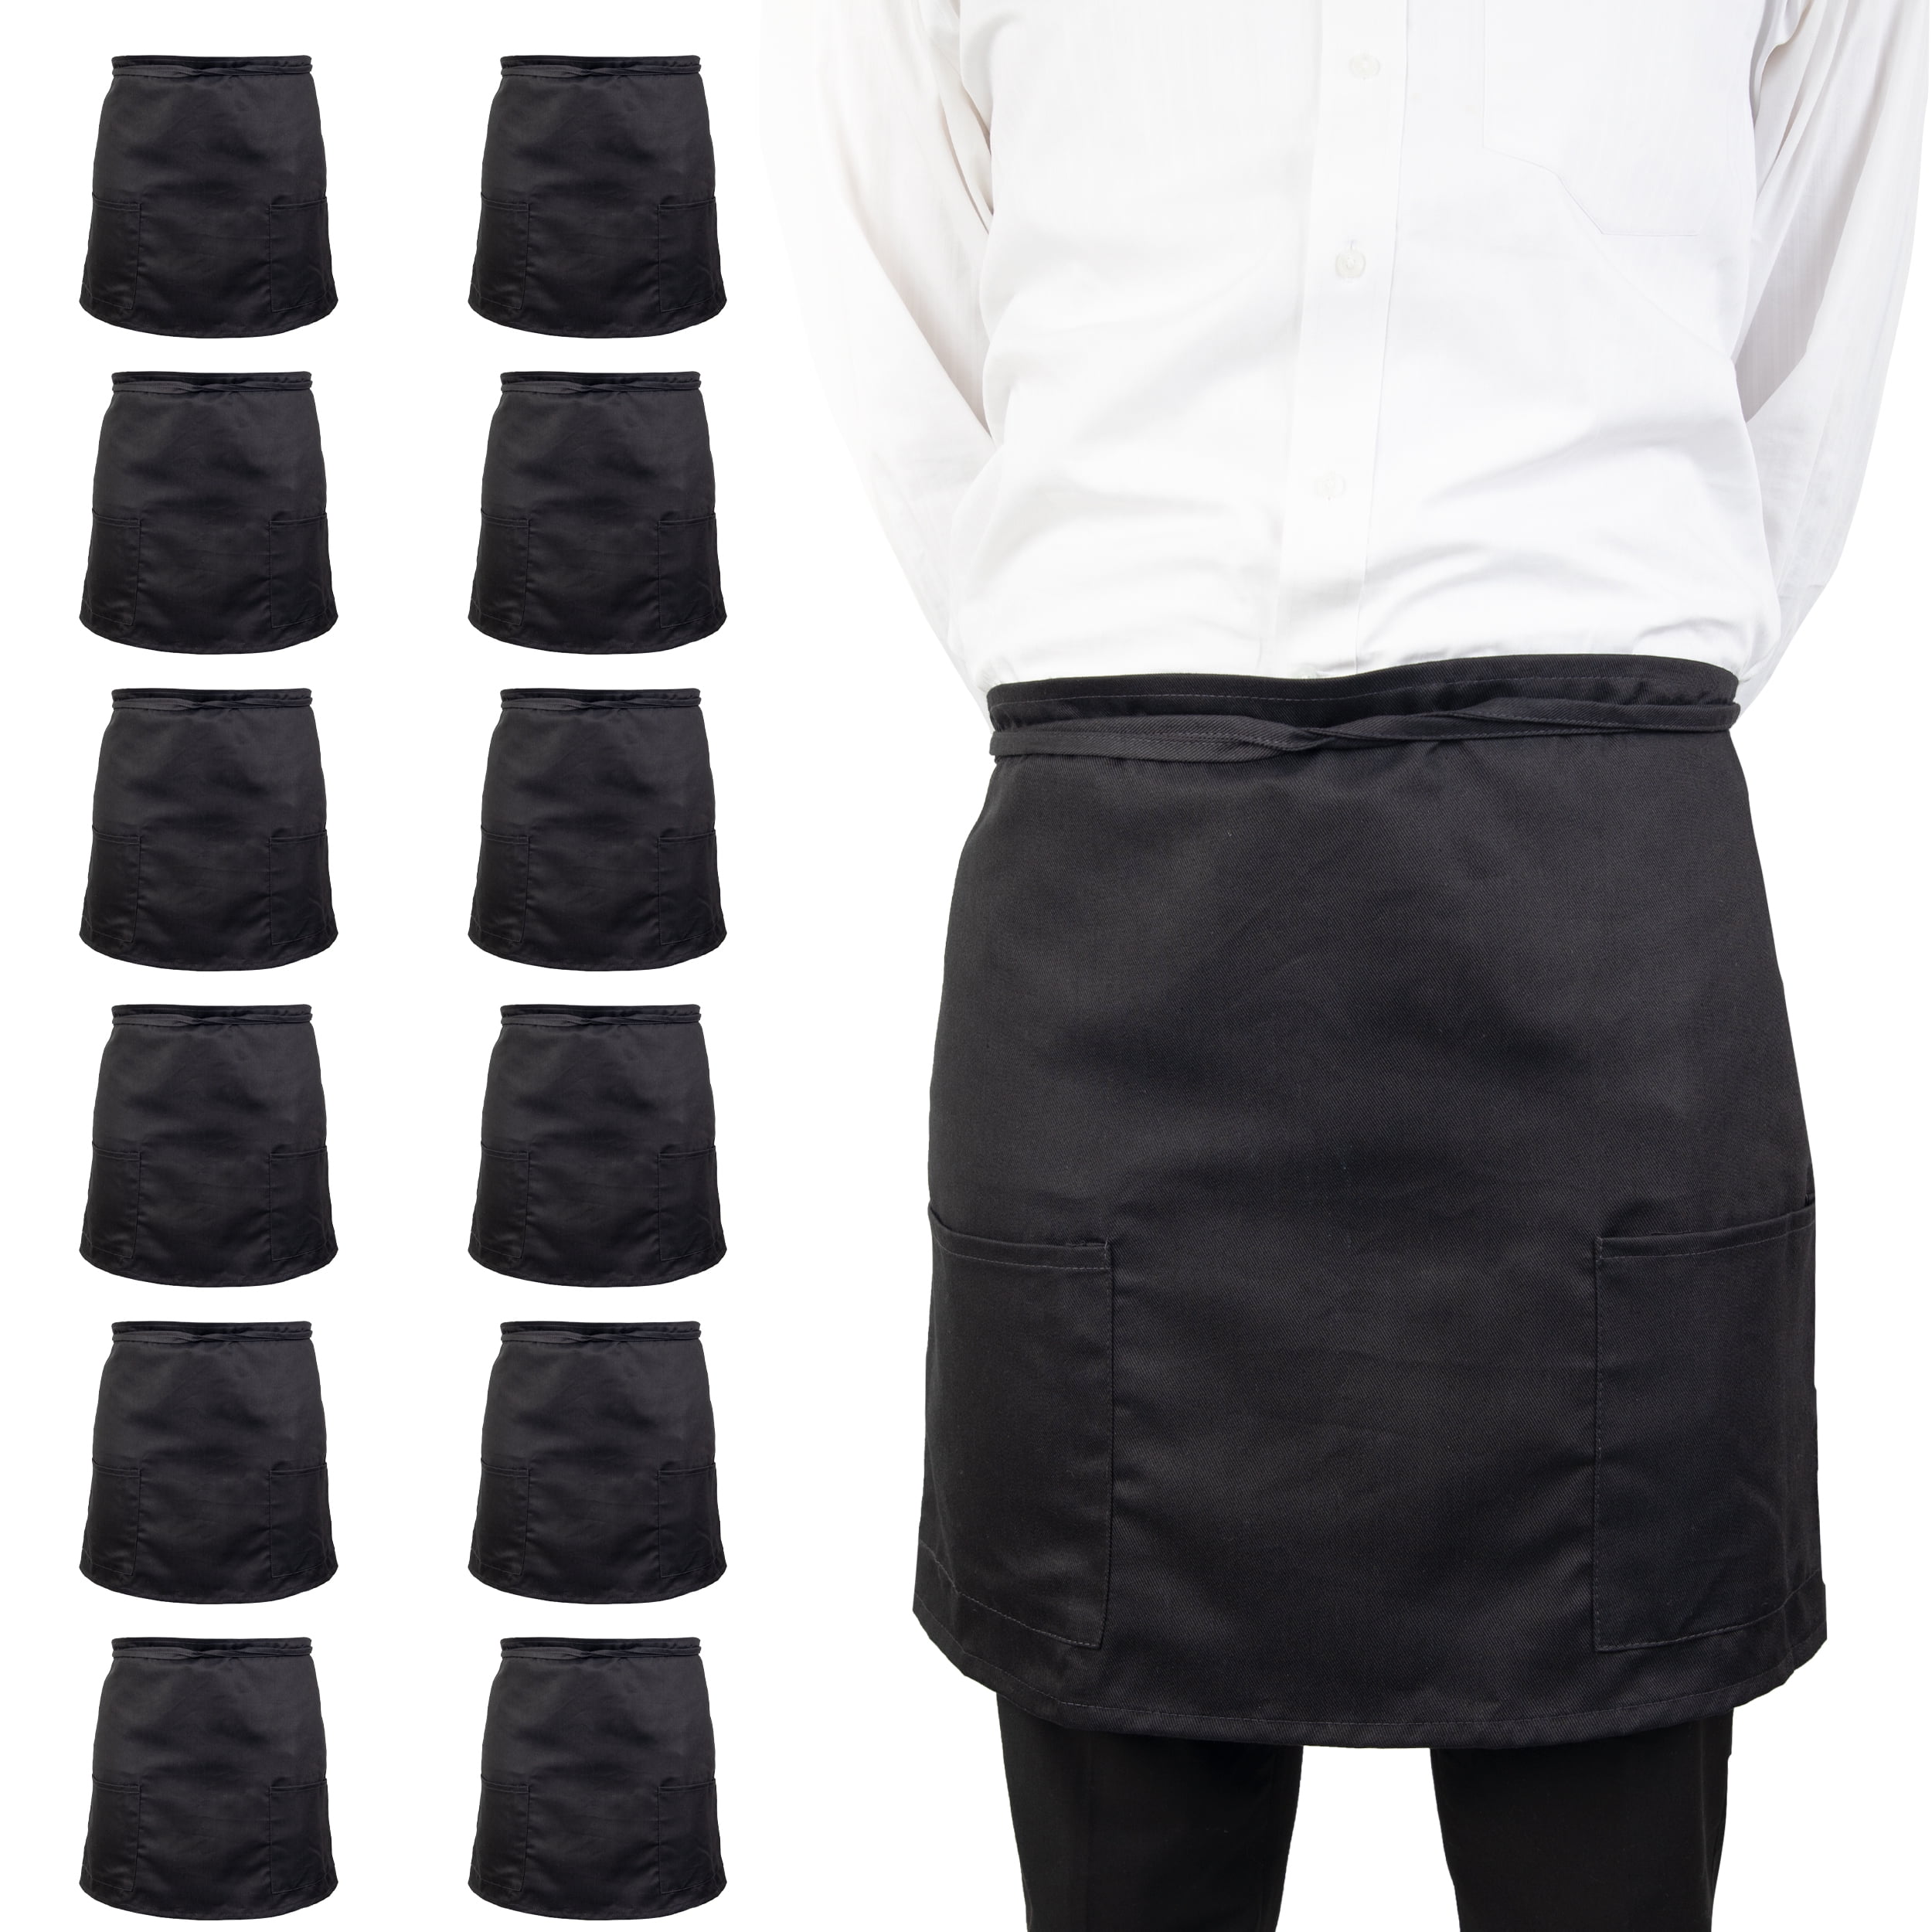 1 new black server apron 3 pocket waist waiter waitress restaurant anti-bleach 